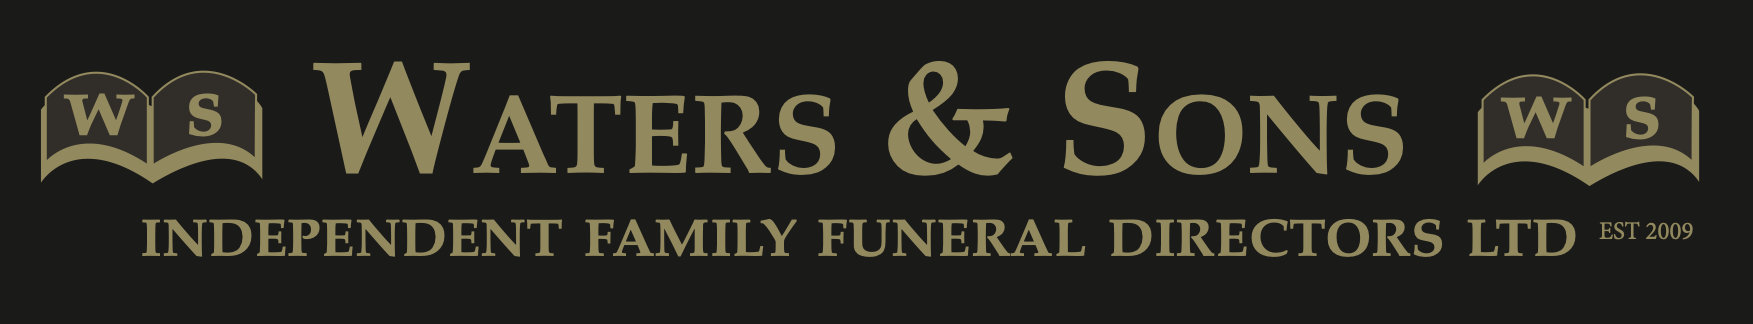 Funeral directors Southampton: Waters & Sons logo